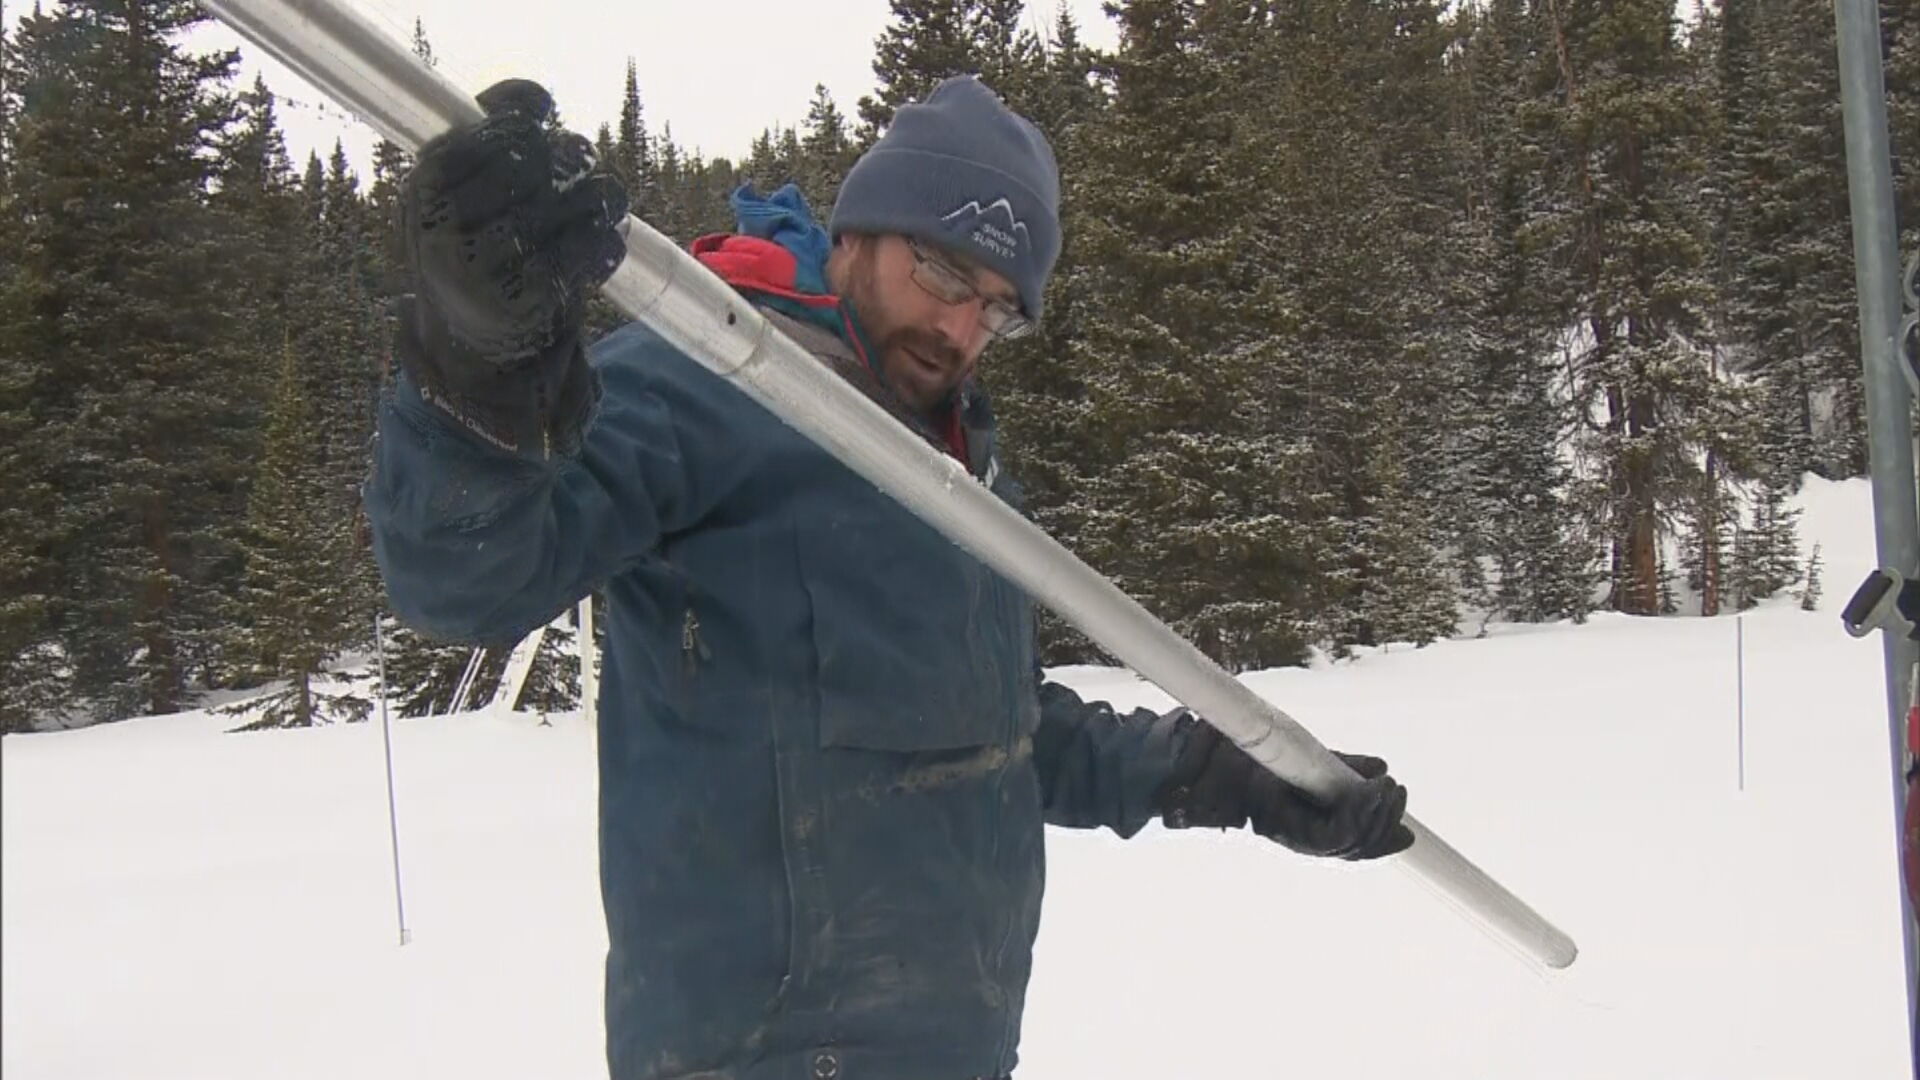 Experts On Colorado Snowpack Monitoring Berthoud Pass Snowpack - CBS Denver